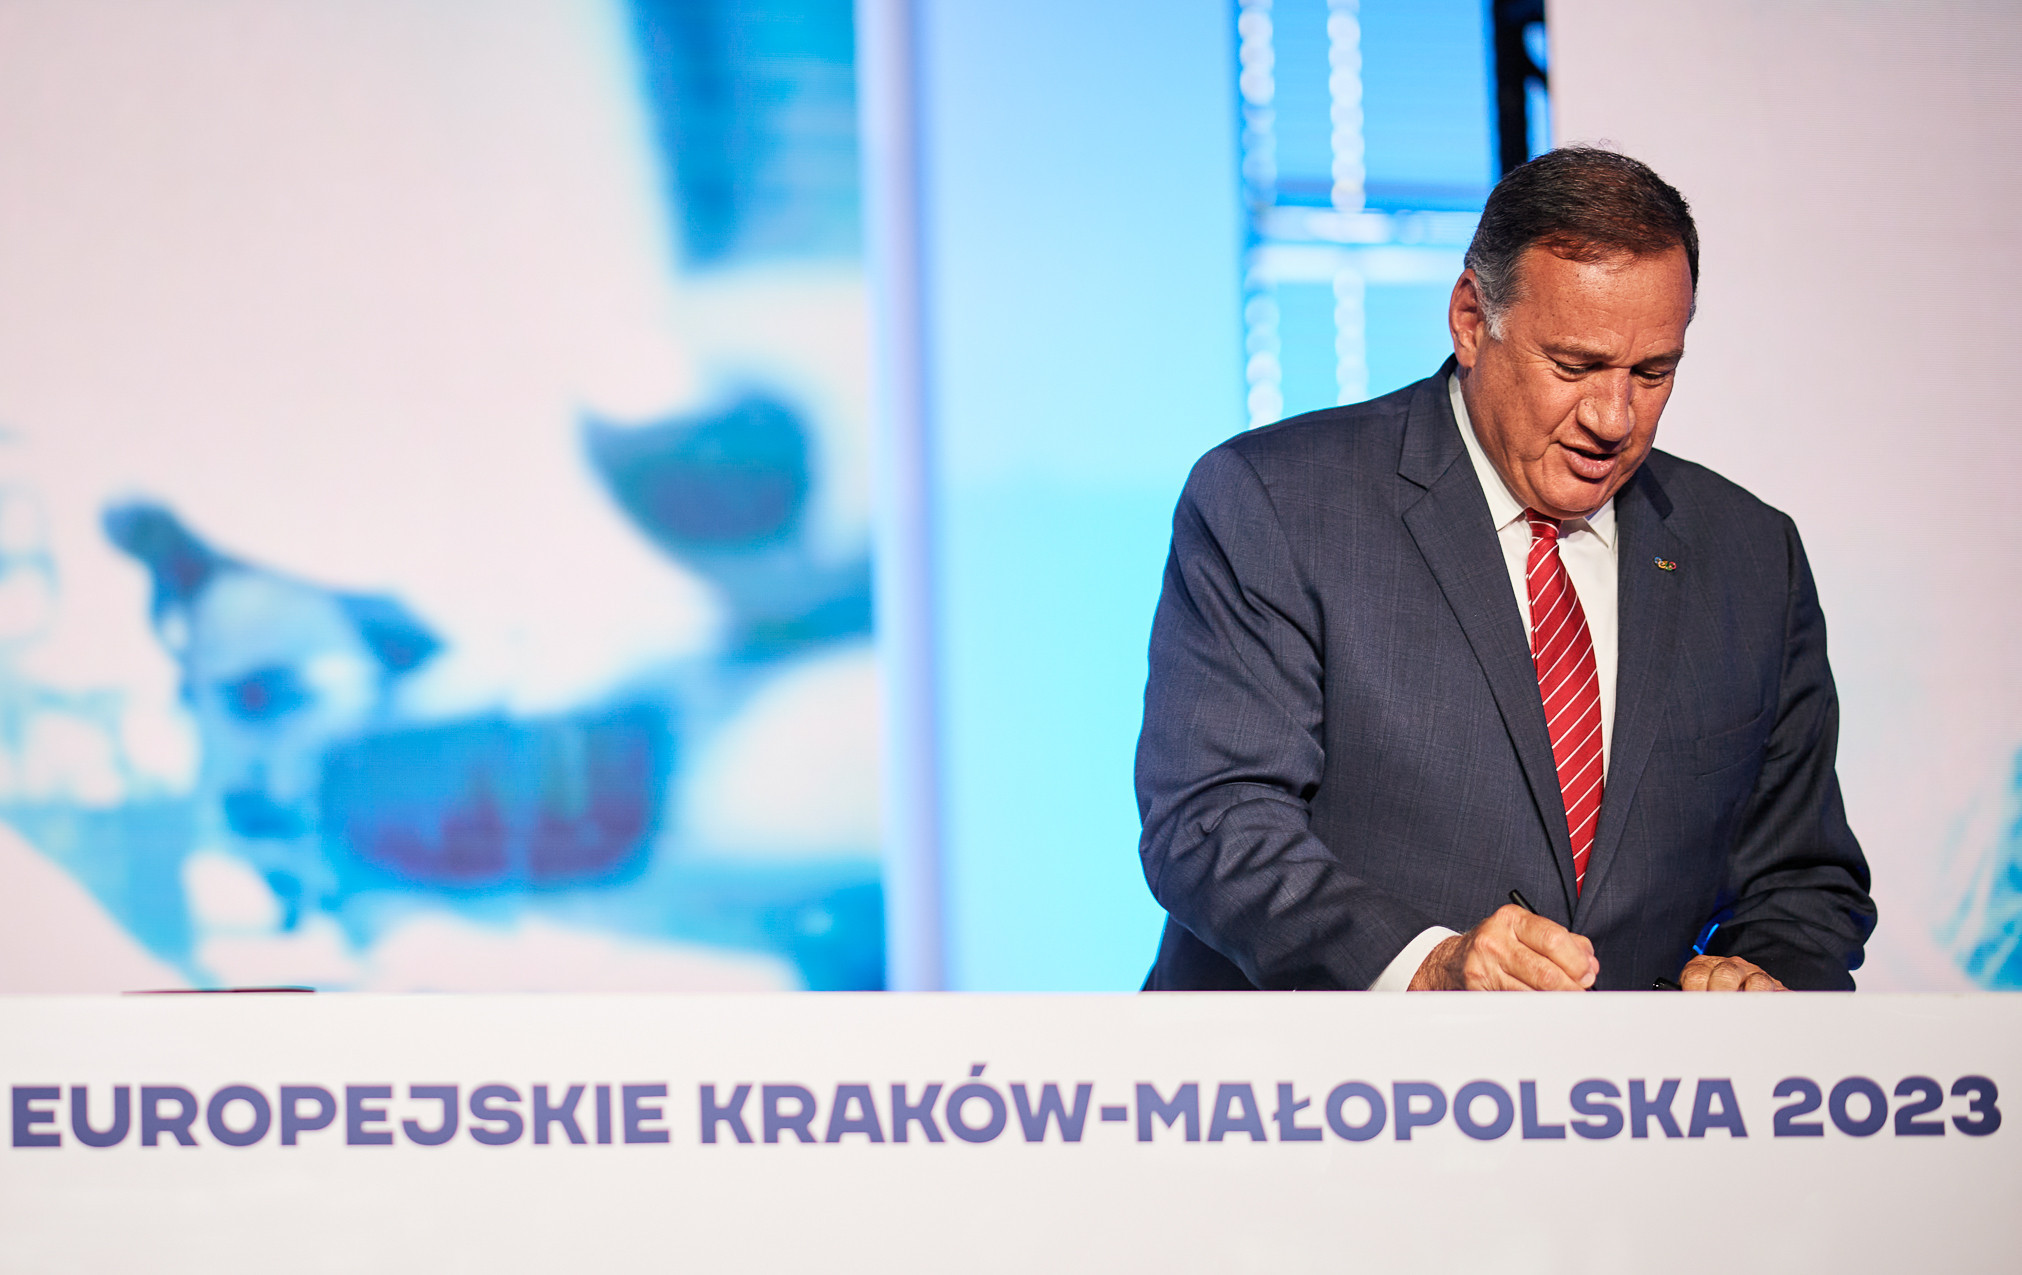 EOC President Spyros Capralos put pen to paper to confirm Kraków-Małopolska as host for next year's European Games ©EOC